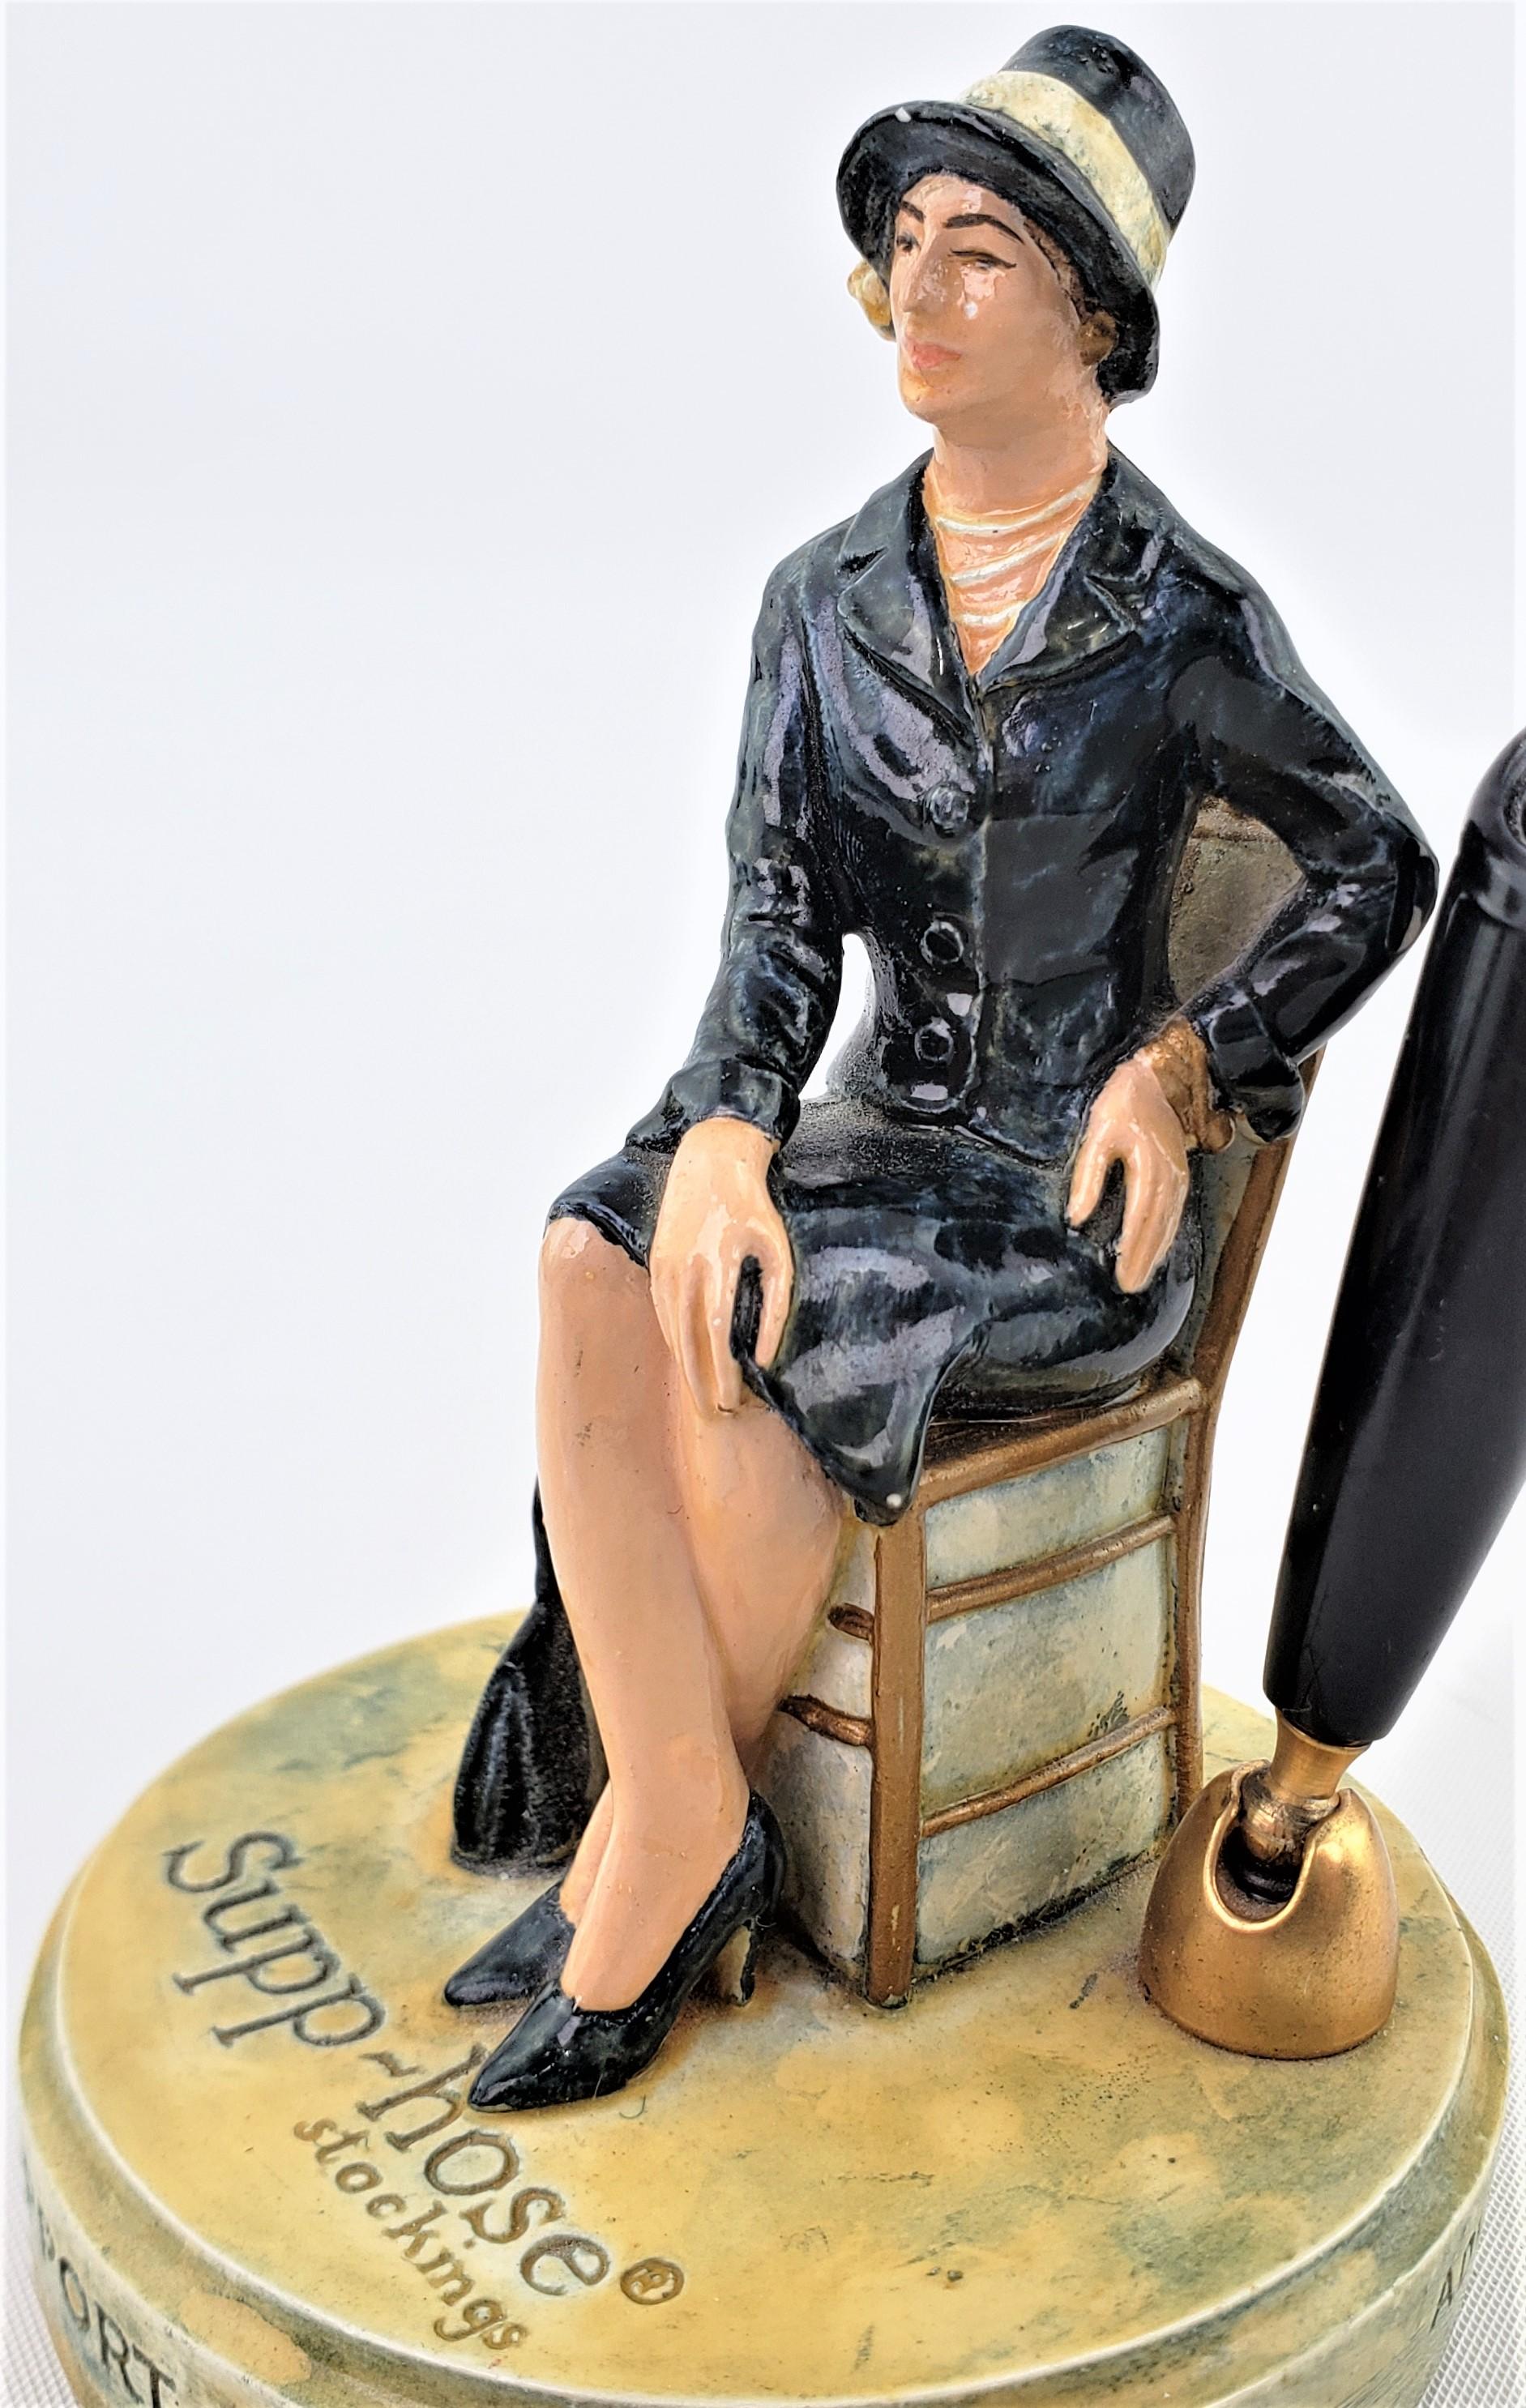 P.W. Baston Supp-Hose Woman's Stockings Advertising Pen Holder Desk Set For Sale 5